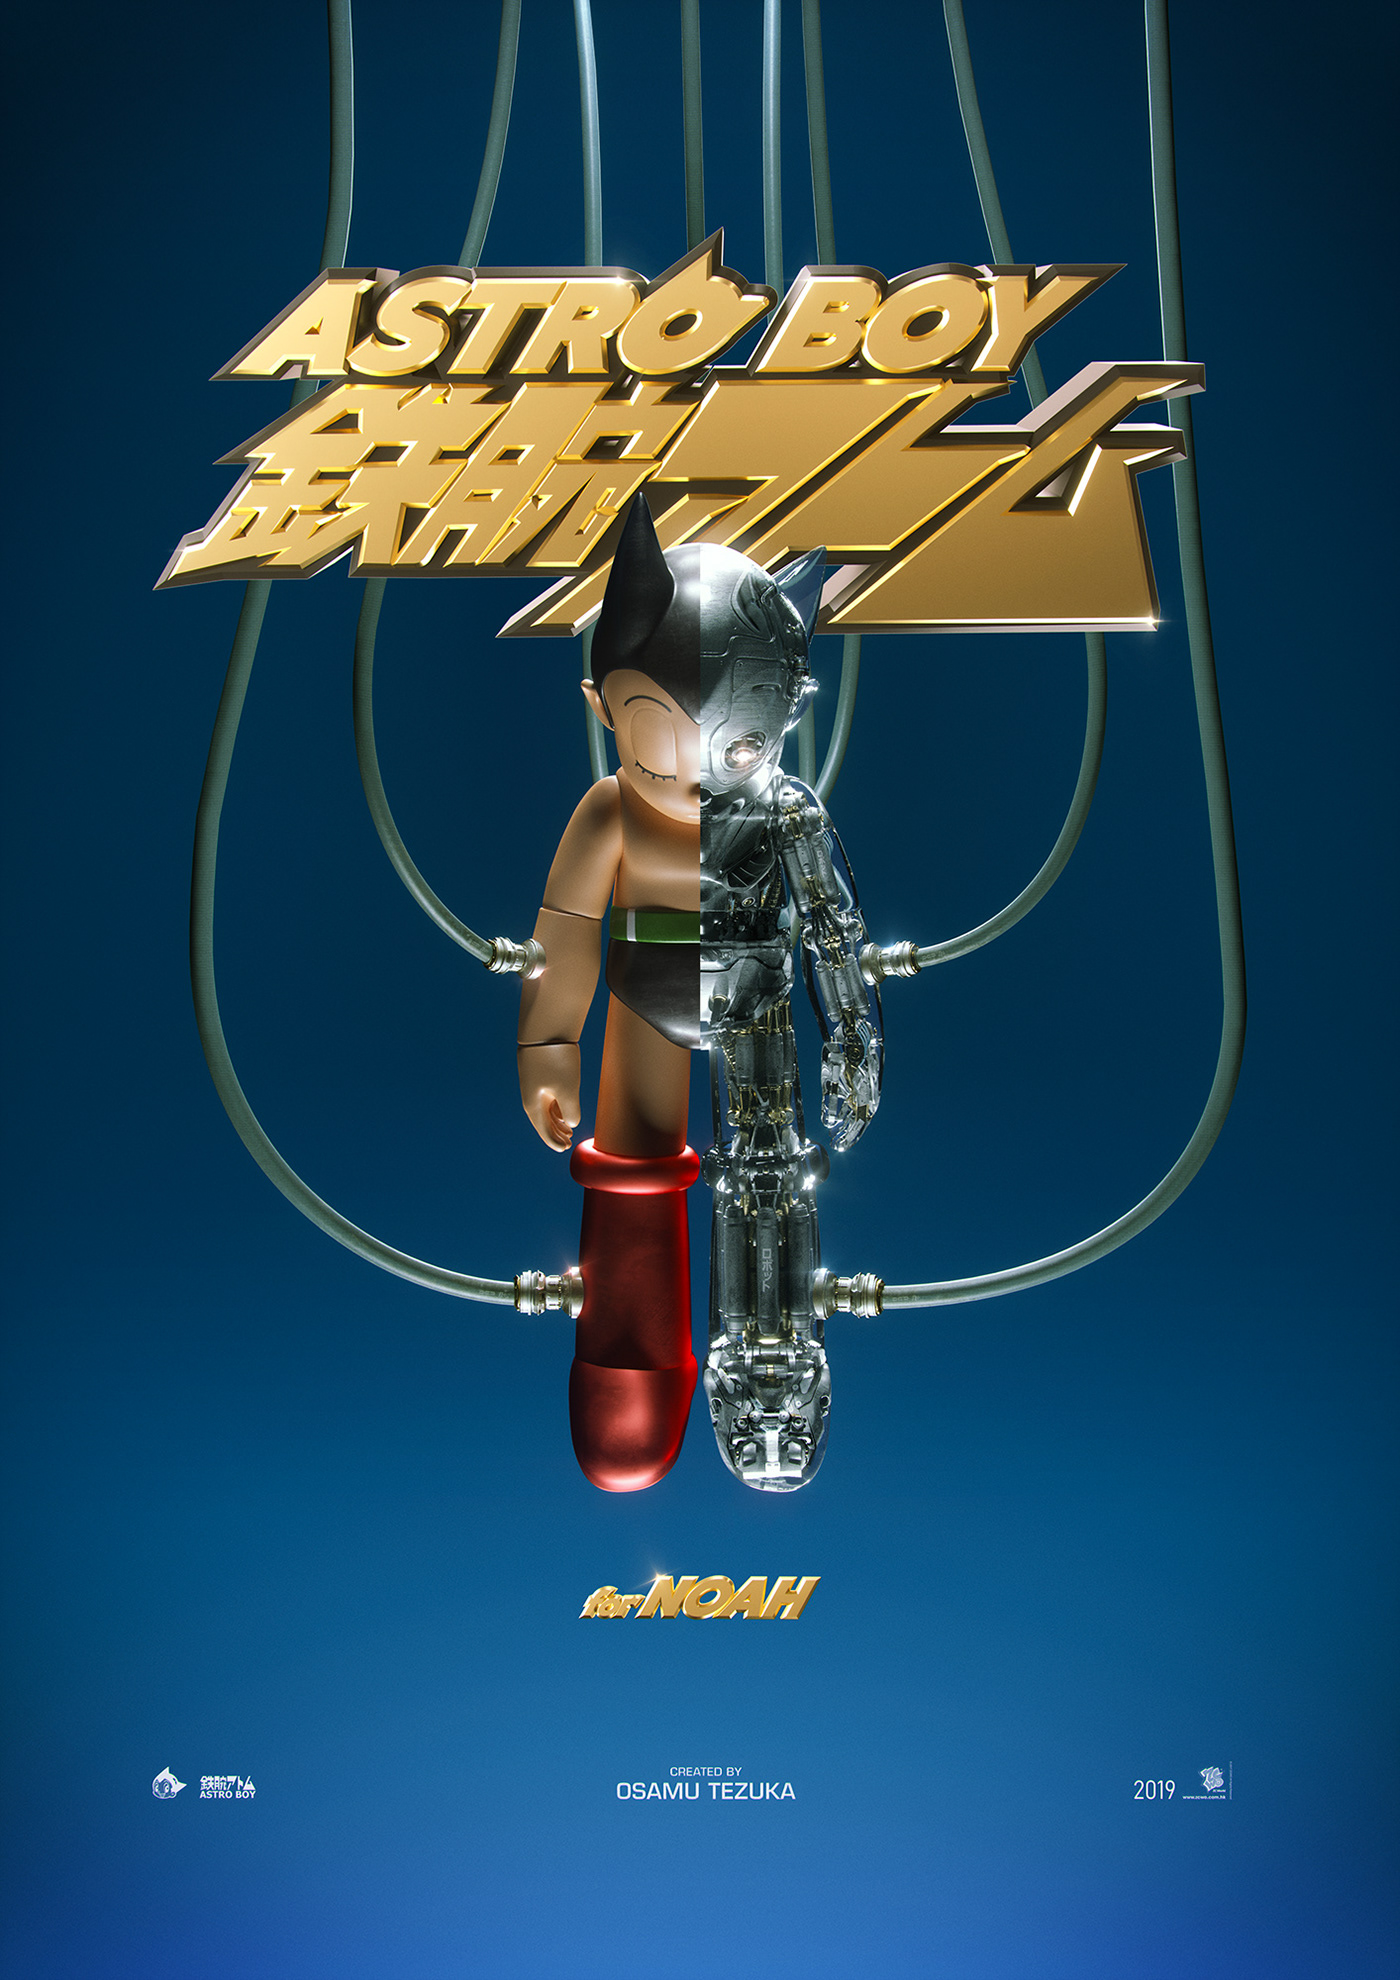 Astro Boy 3D Tribute